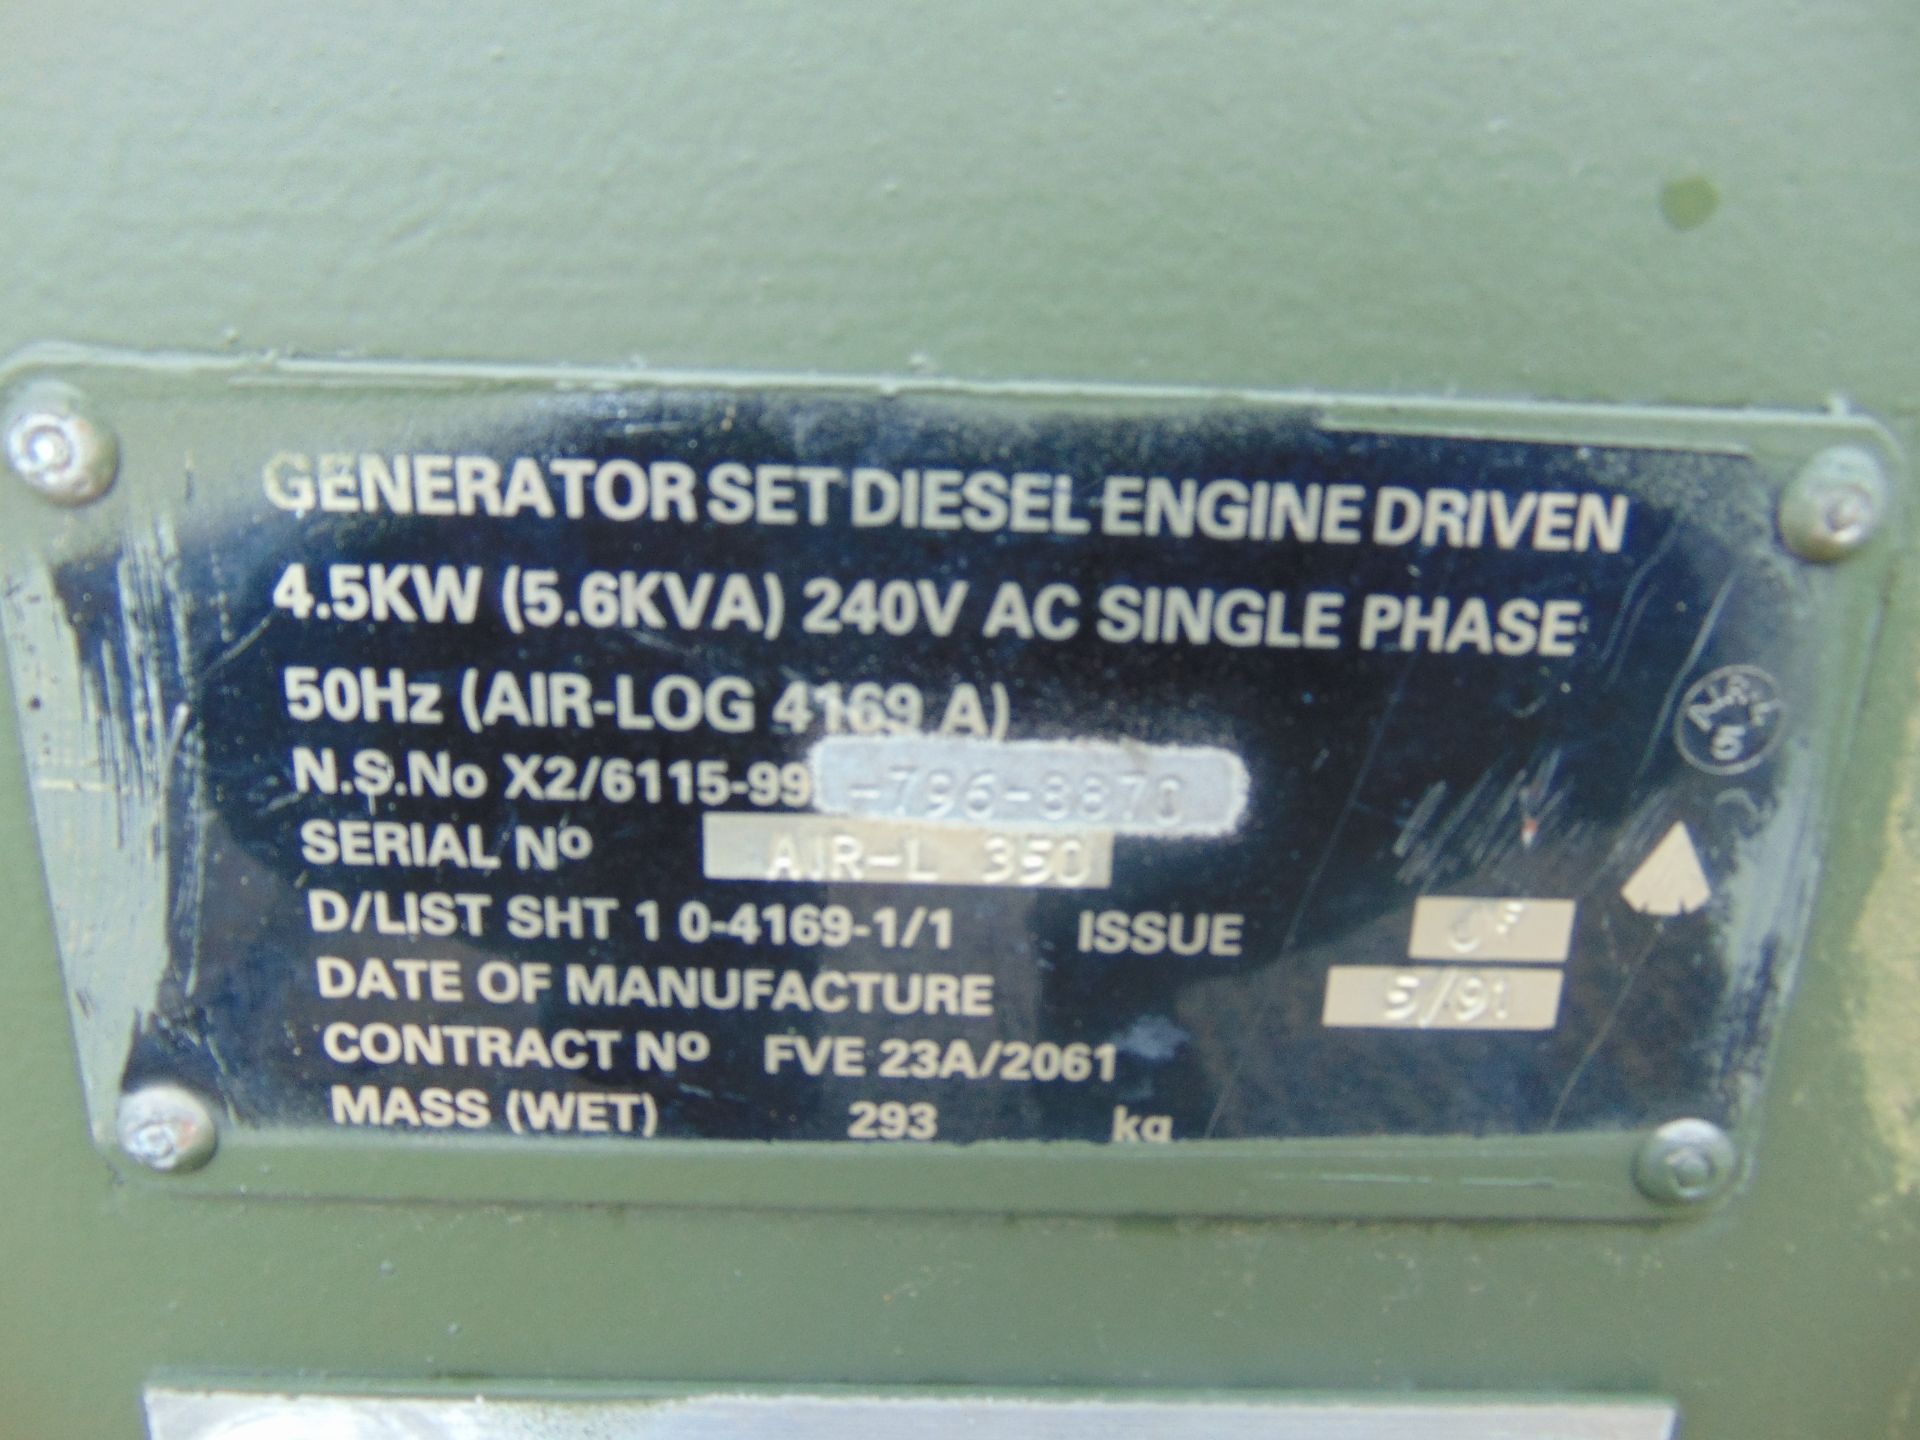 Lister Petter Air Log 4169 A 5.6 KVA Diesel Generator - Image 13 of 17